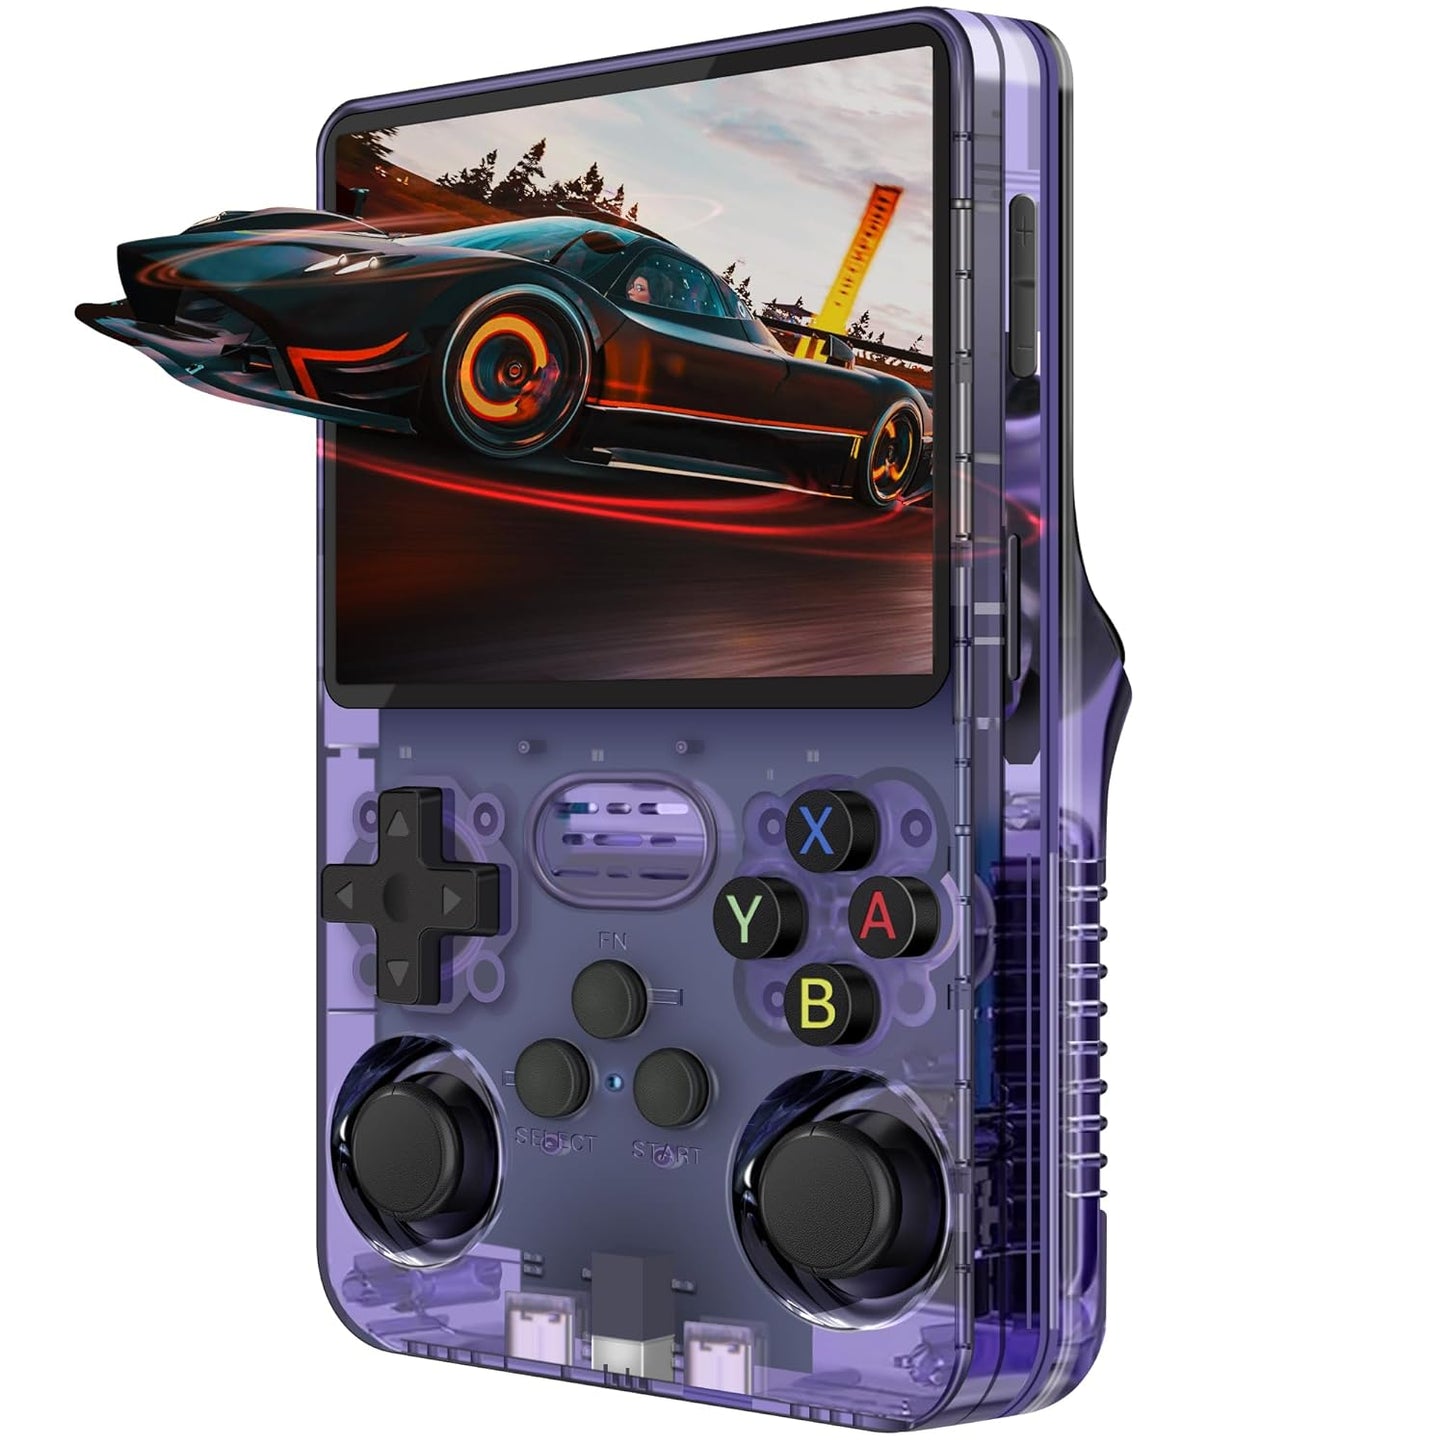 Retro Handheld Game Console - Deal Dynamo Shop